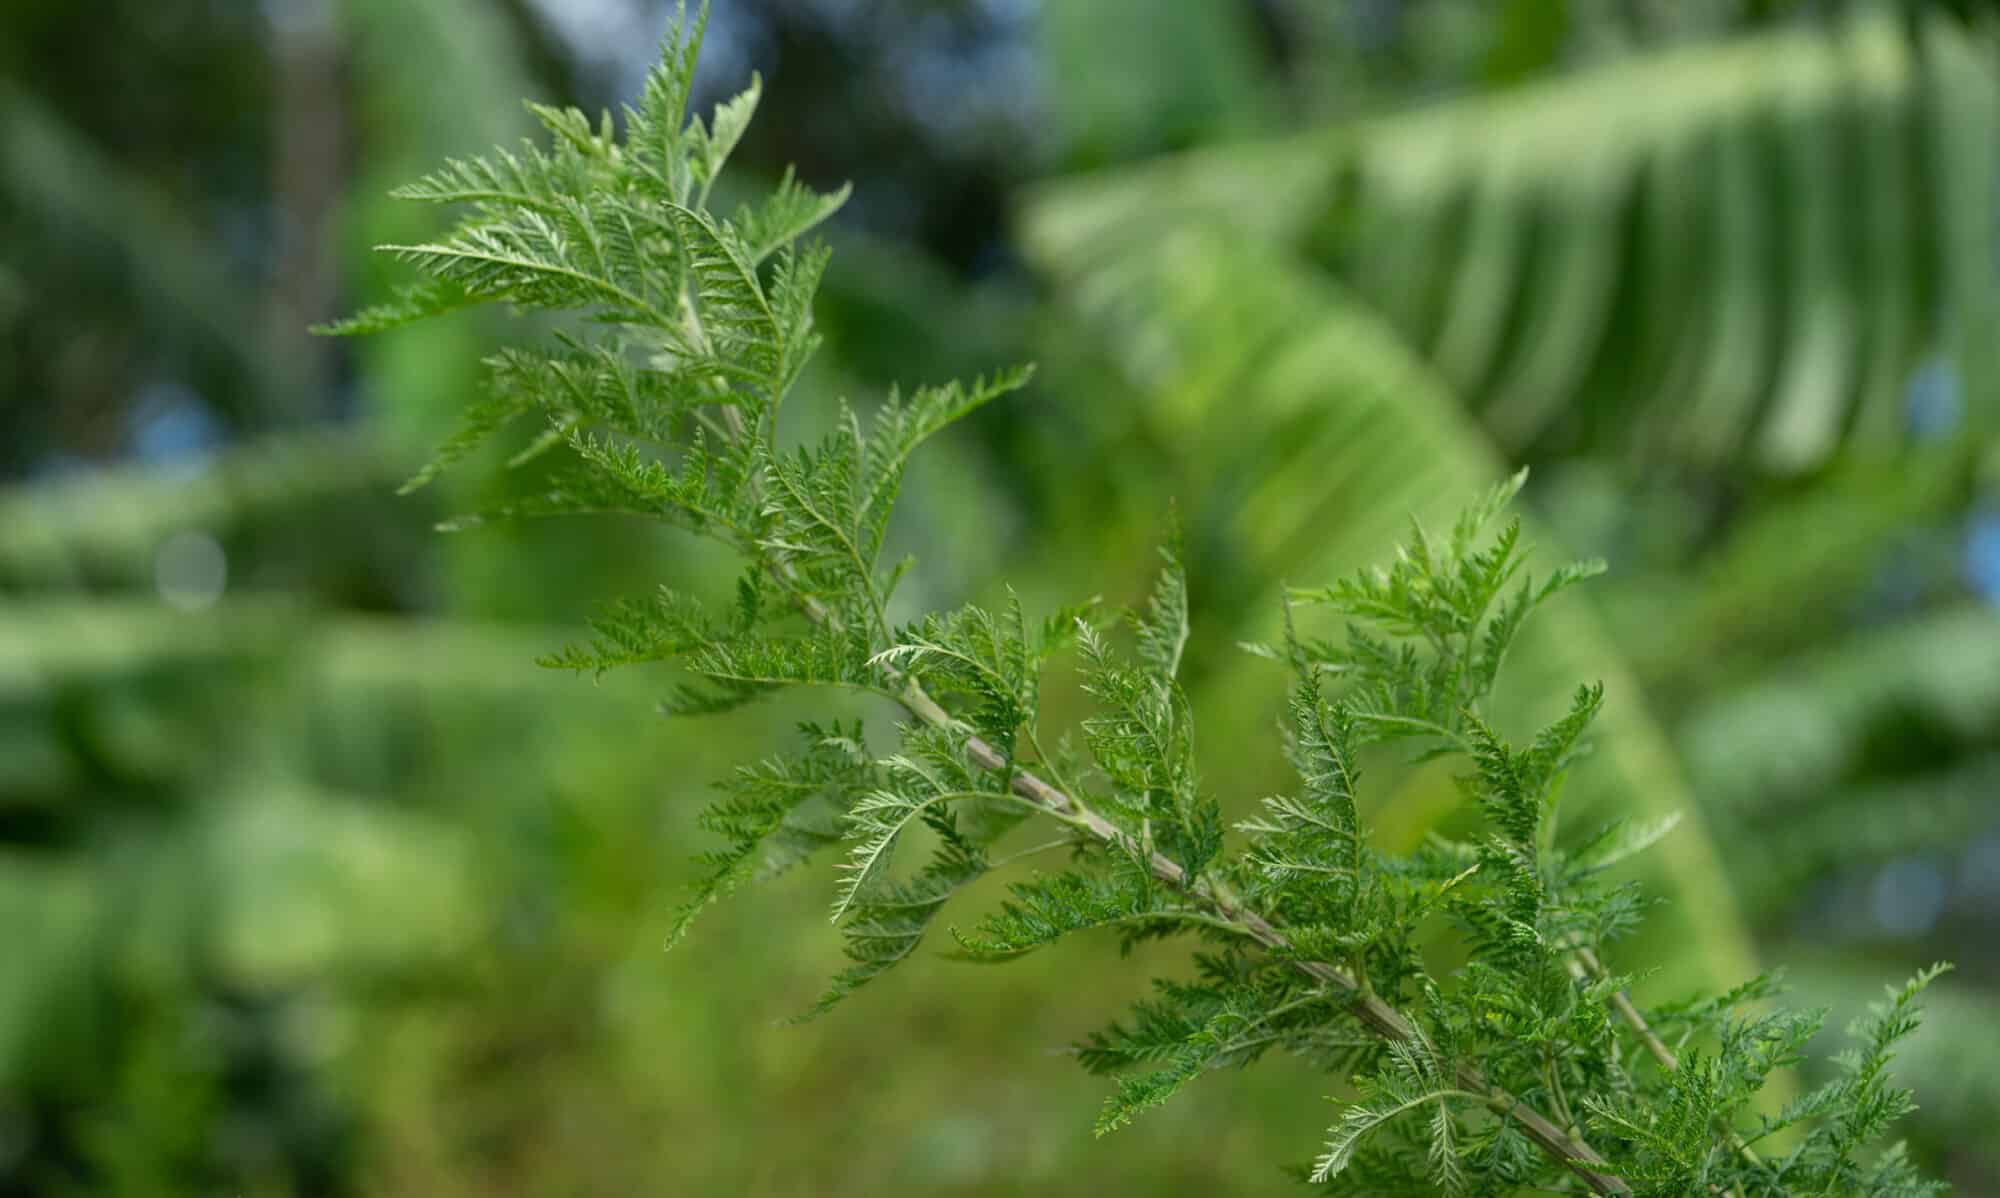 Artemisia annua L. in the field.